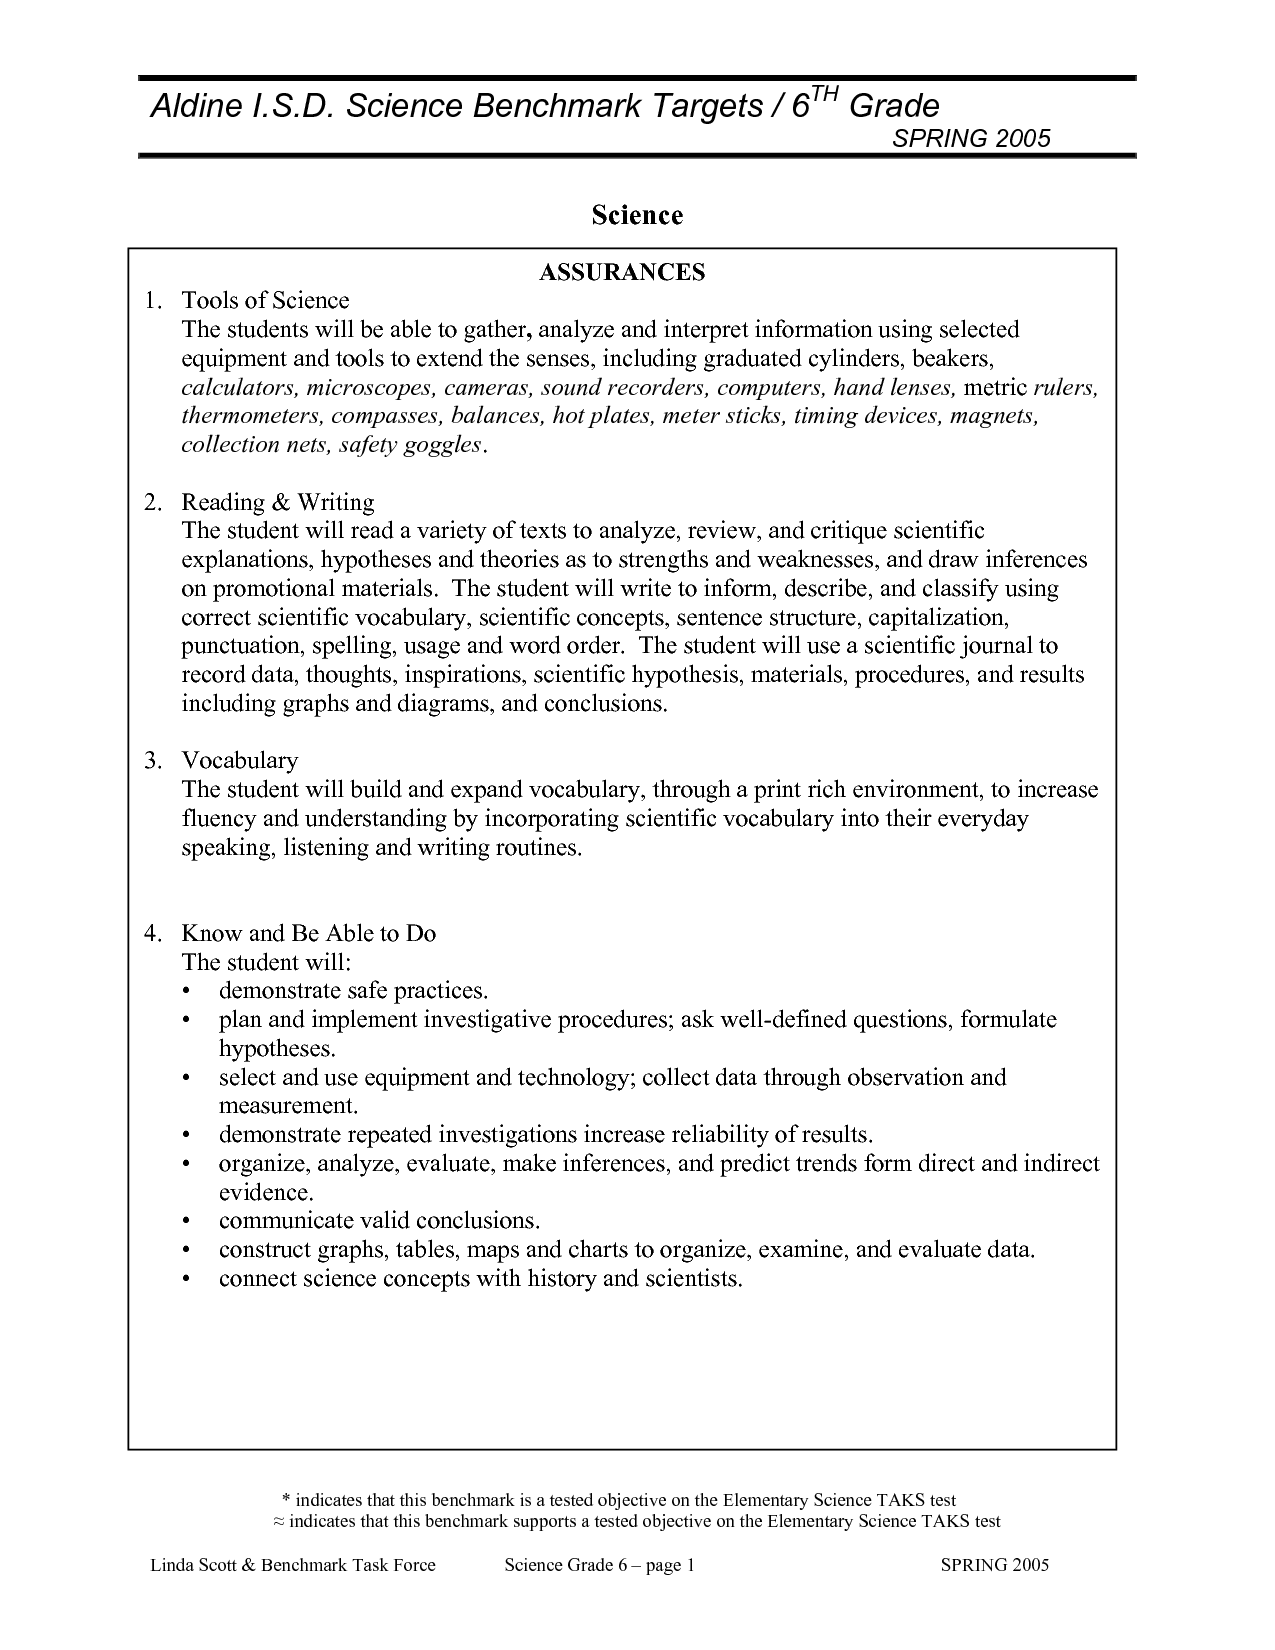 science-worksheet-category-page-3-worksheeto